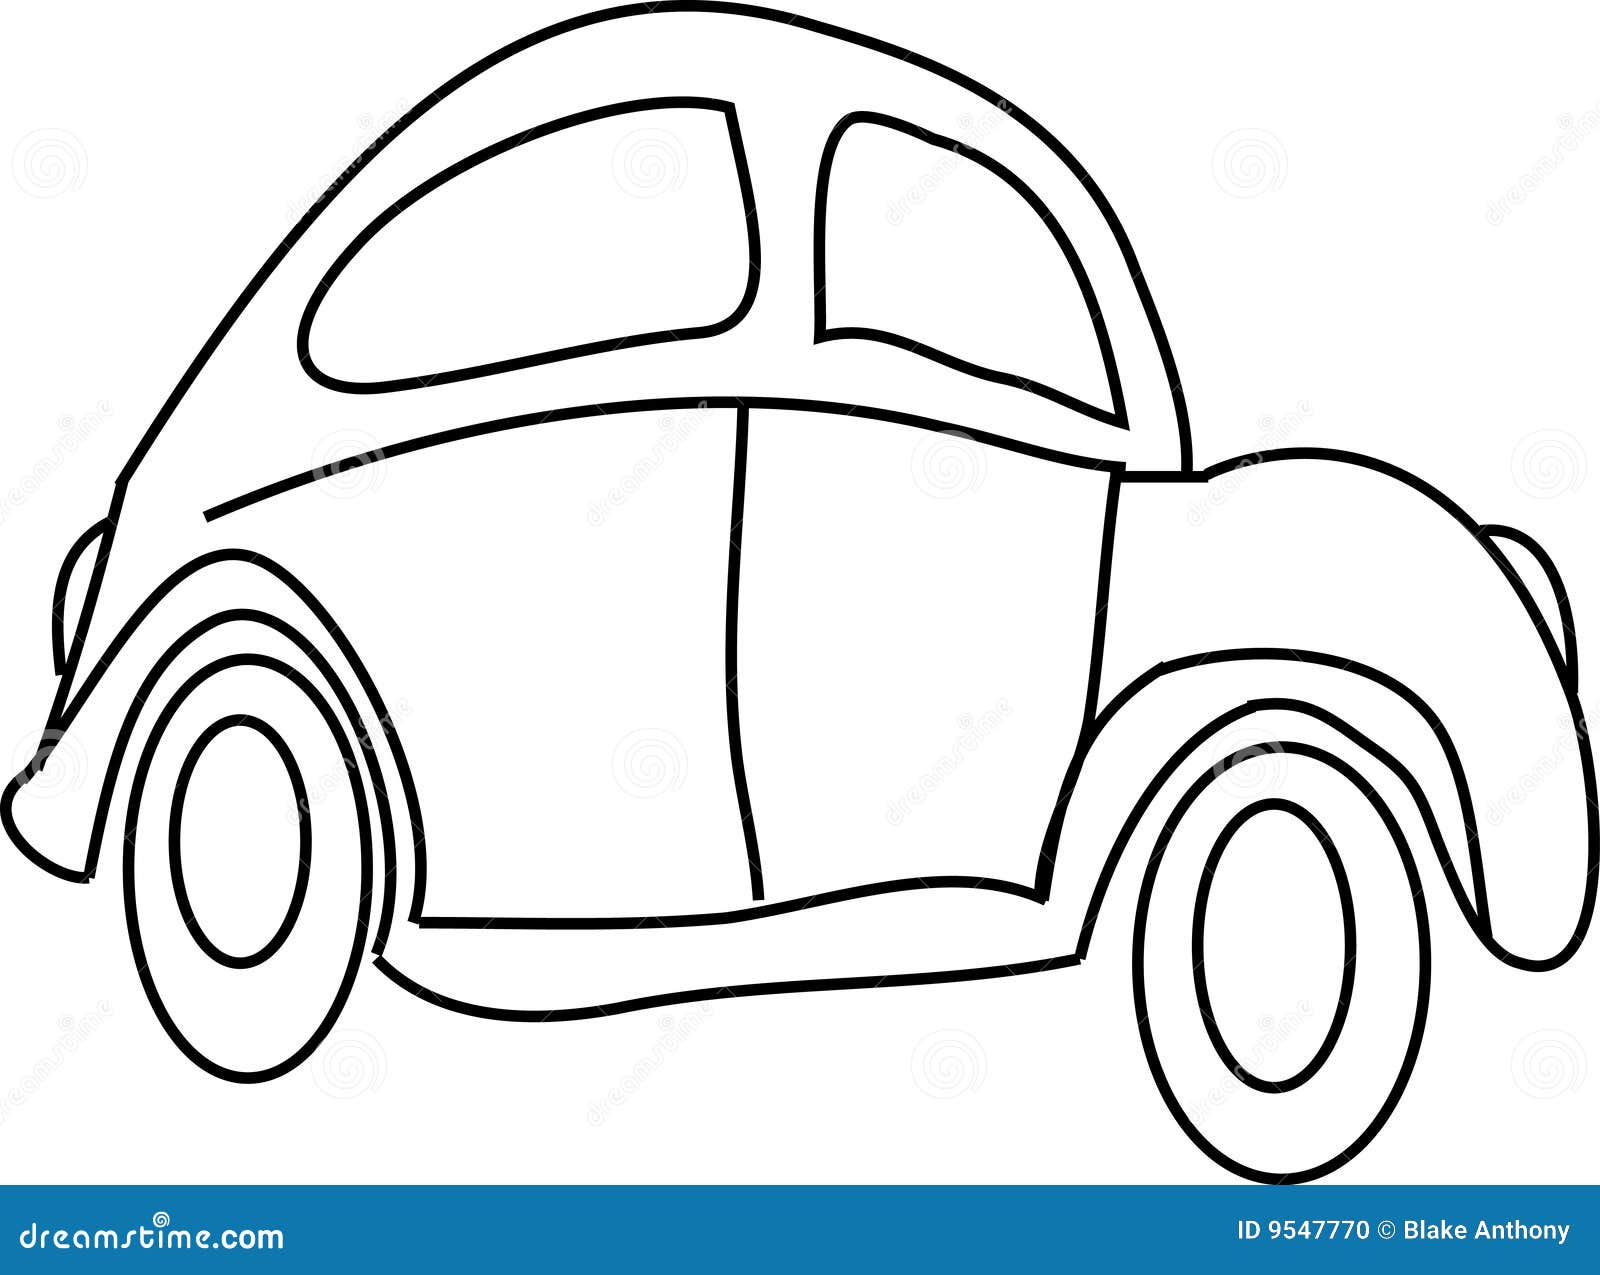 Cartoon car stock vector. Illustration of ready, outline - 9547770